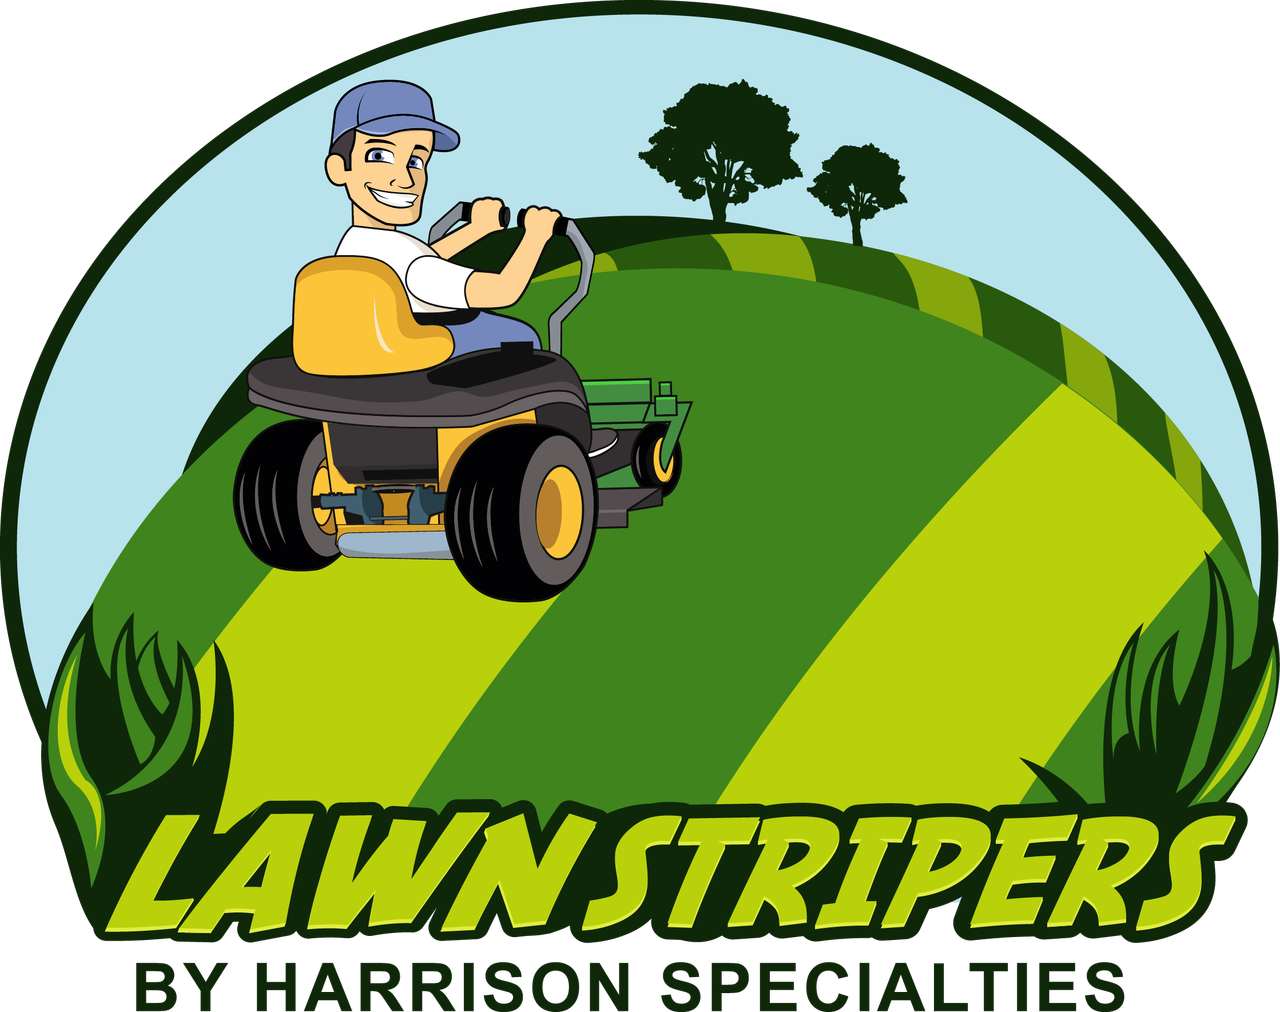 Lawn Striping Kit for 2014-2022 John Deere Ztrak 930M 60" 7 Iron deck